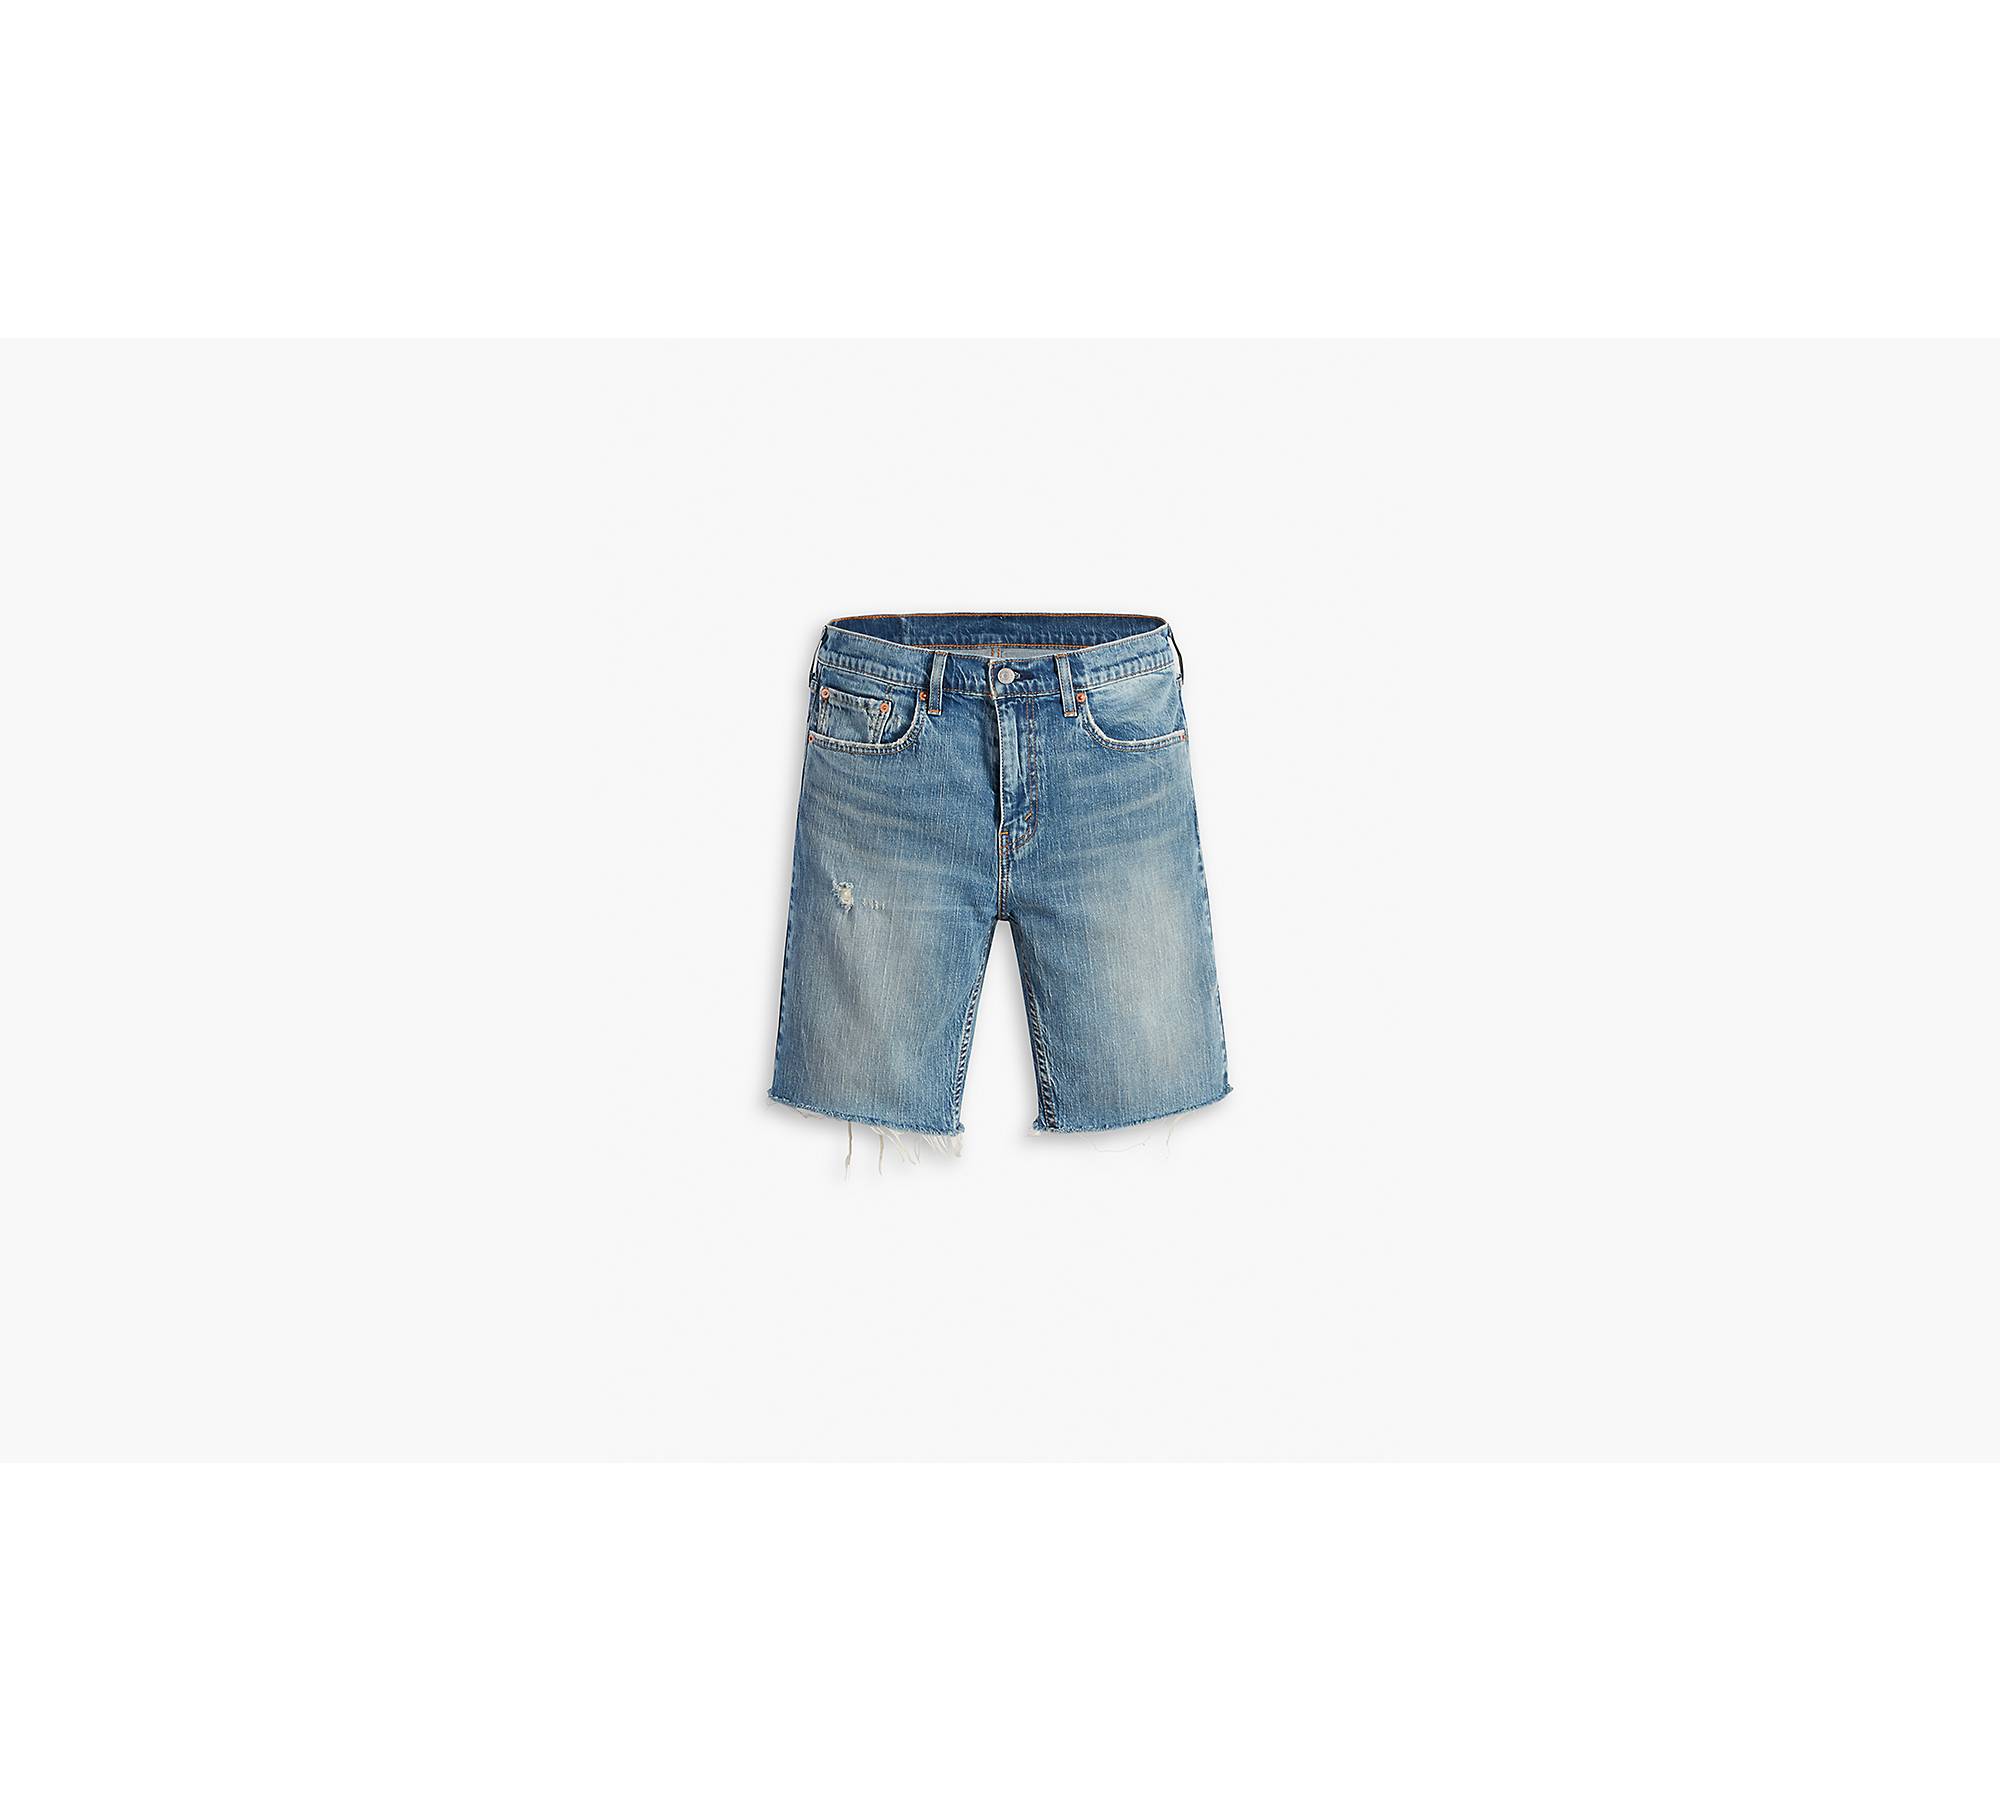 405 Standard Denim 10 Men's Shorts - Light Wash